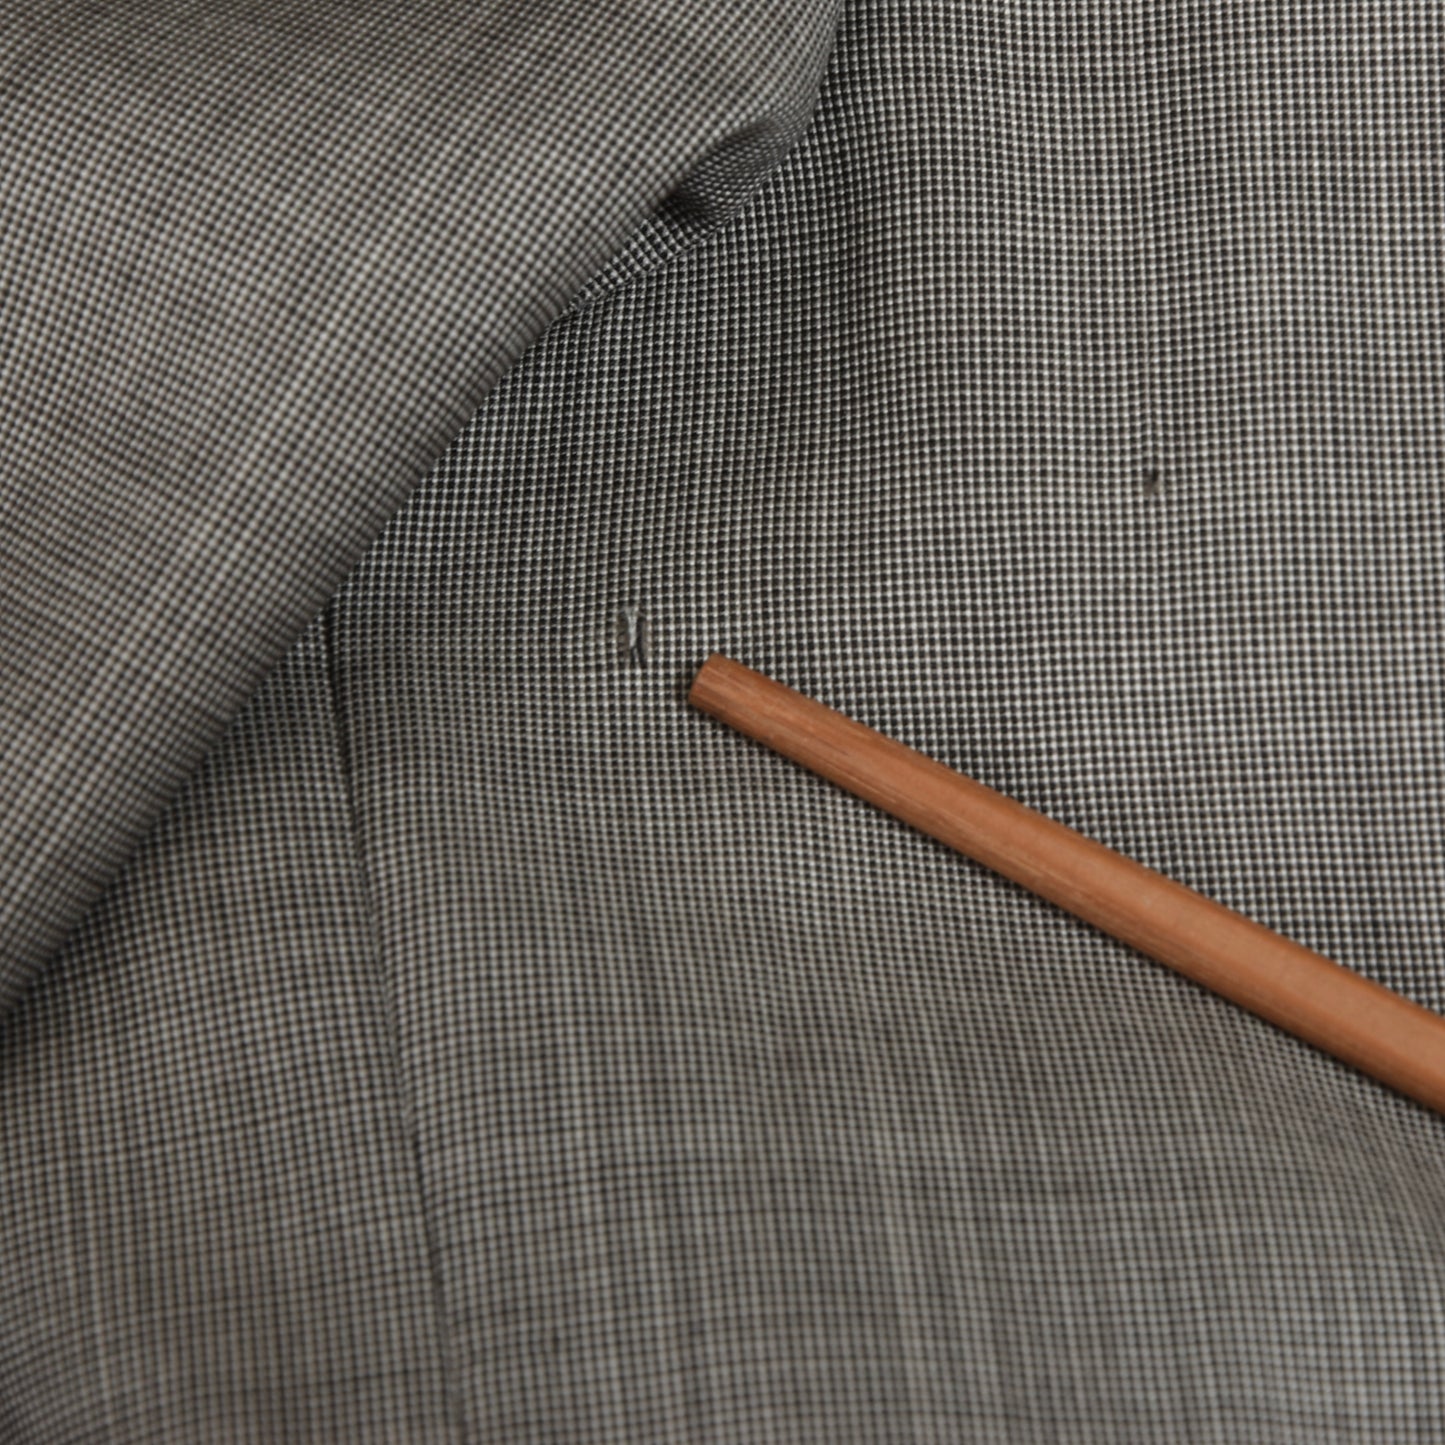 Raffaele Caruso Yorkshire Wool Jacket Size 48 - Grey